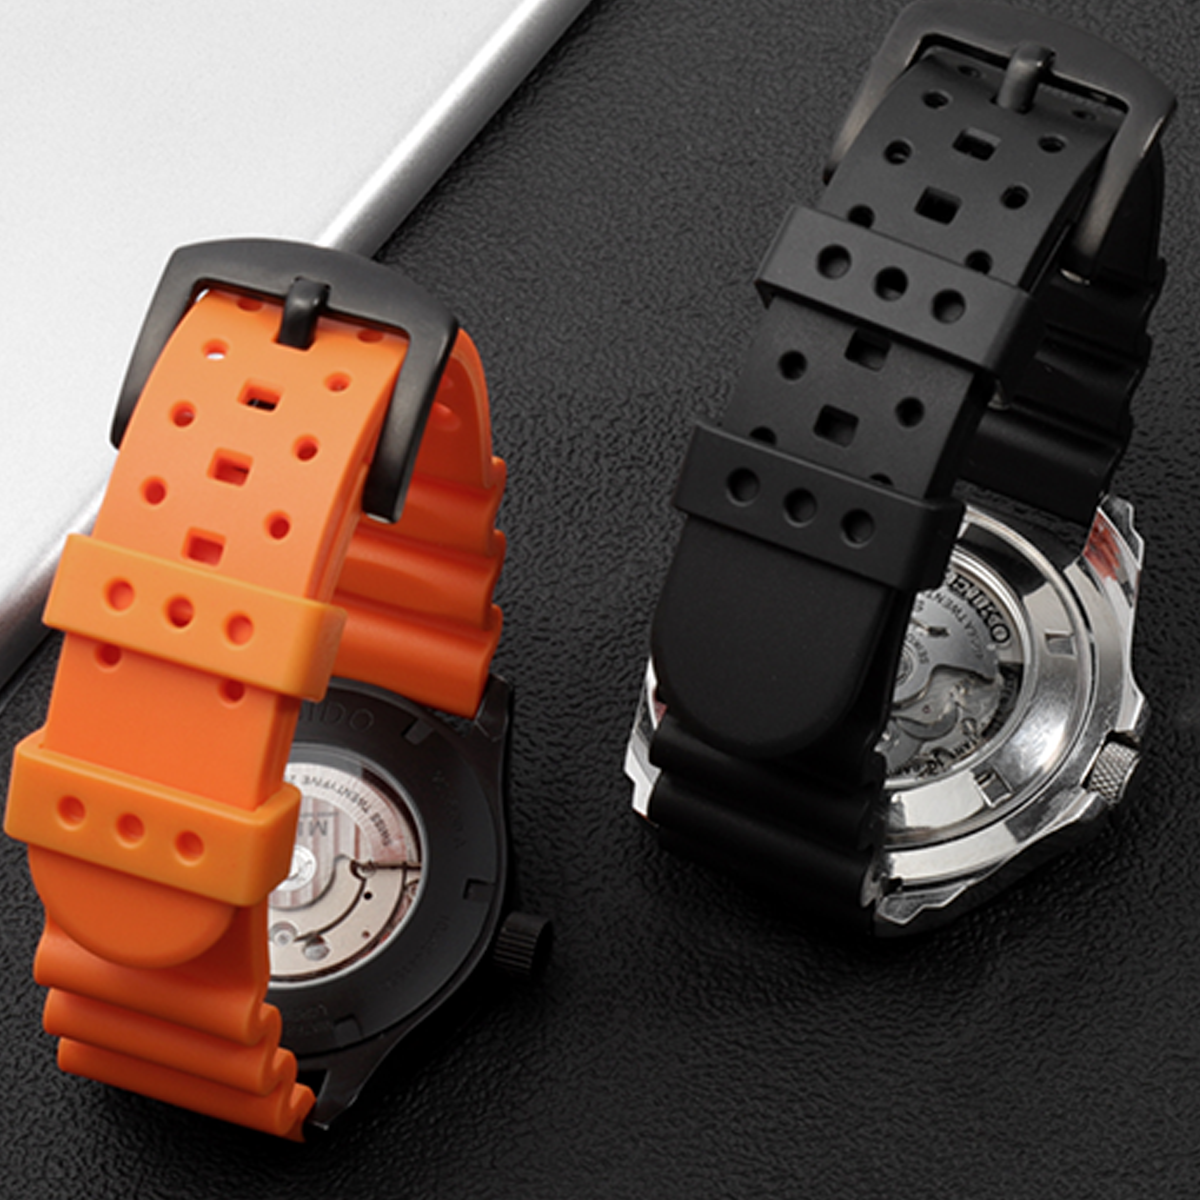 Laser Dice Quick-Release FKM Rubber Watch Strap Green 